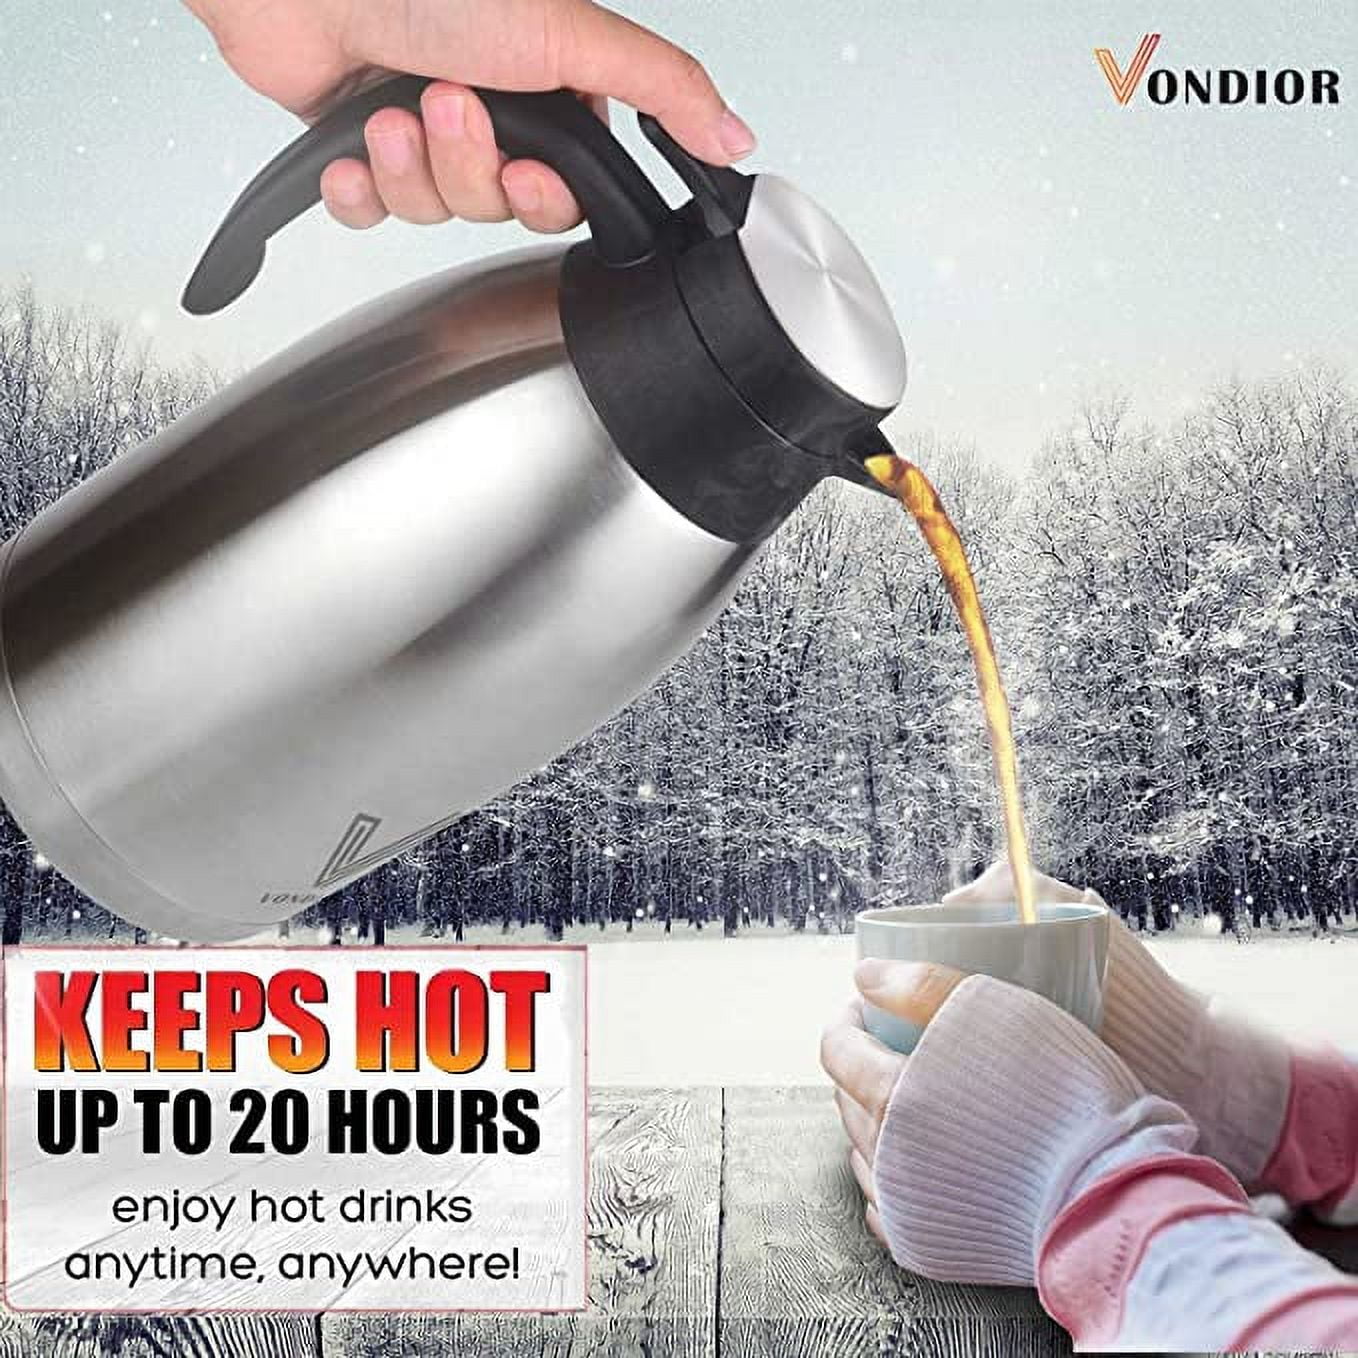 Vermida iSH09-M423901mn 68 Oz Thermal Coffee Carafe,2 Liter